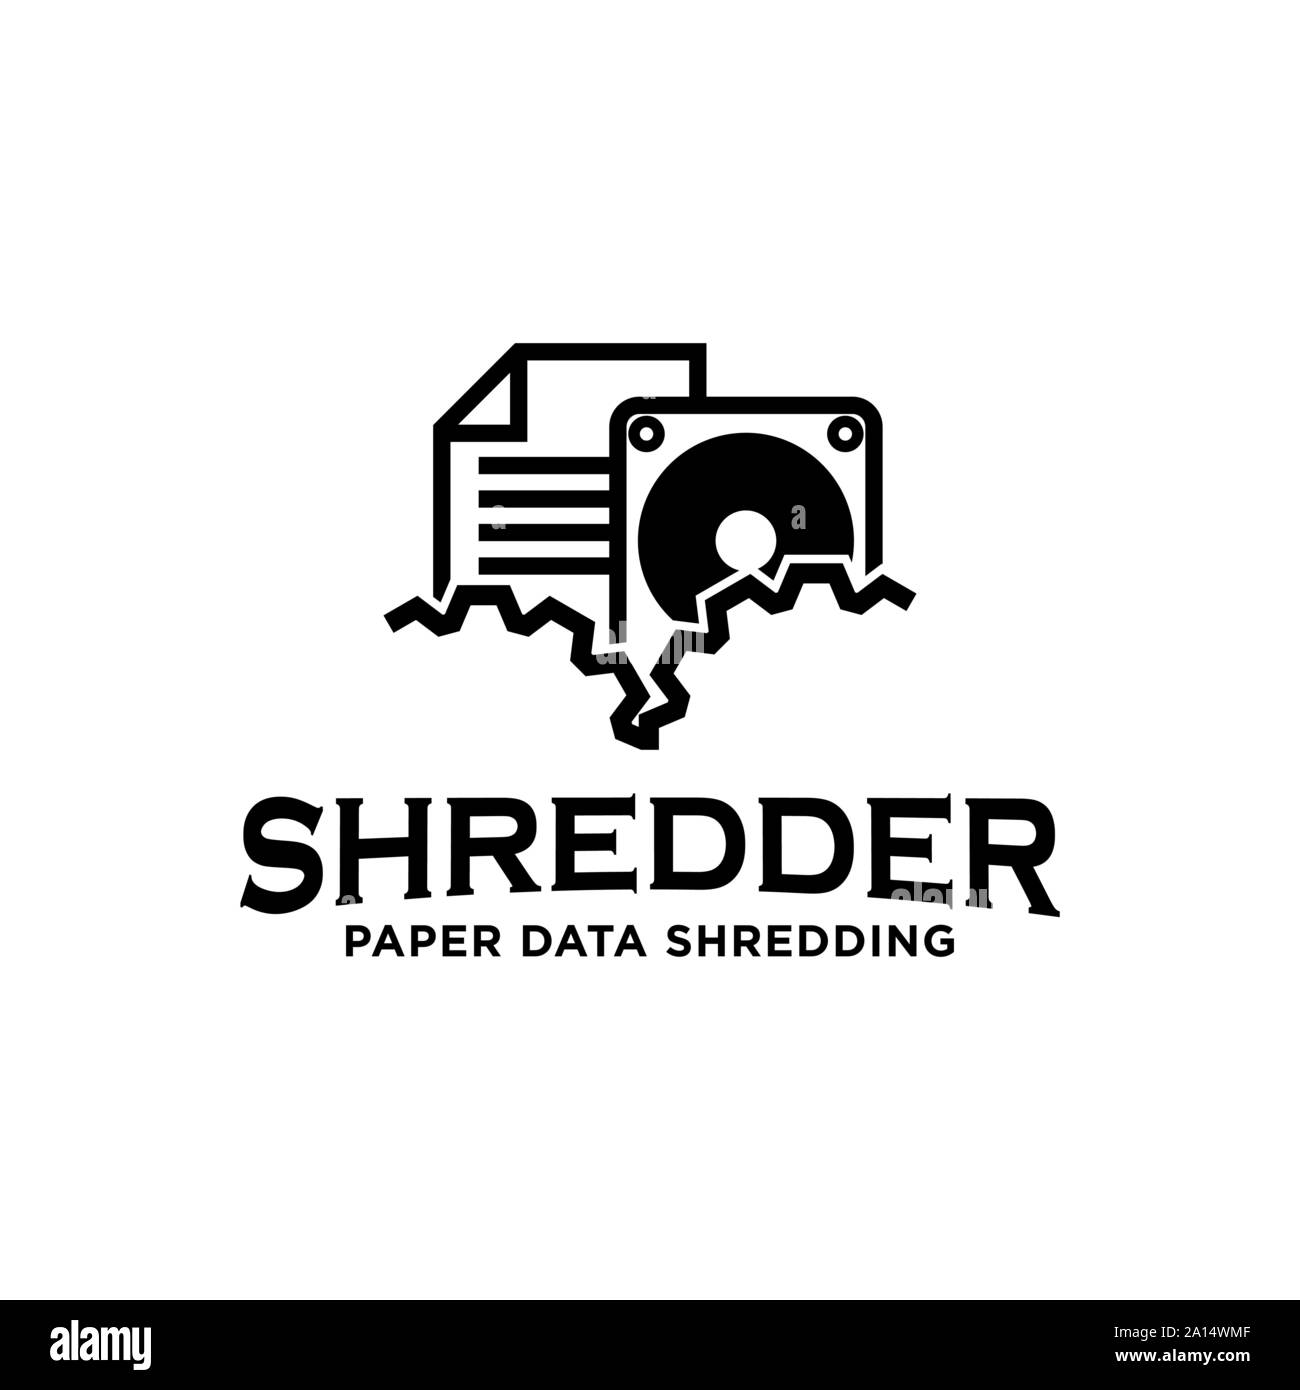 Shredding services paper data - destruction equipped logo icon Stock Vector